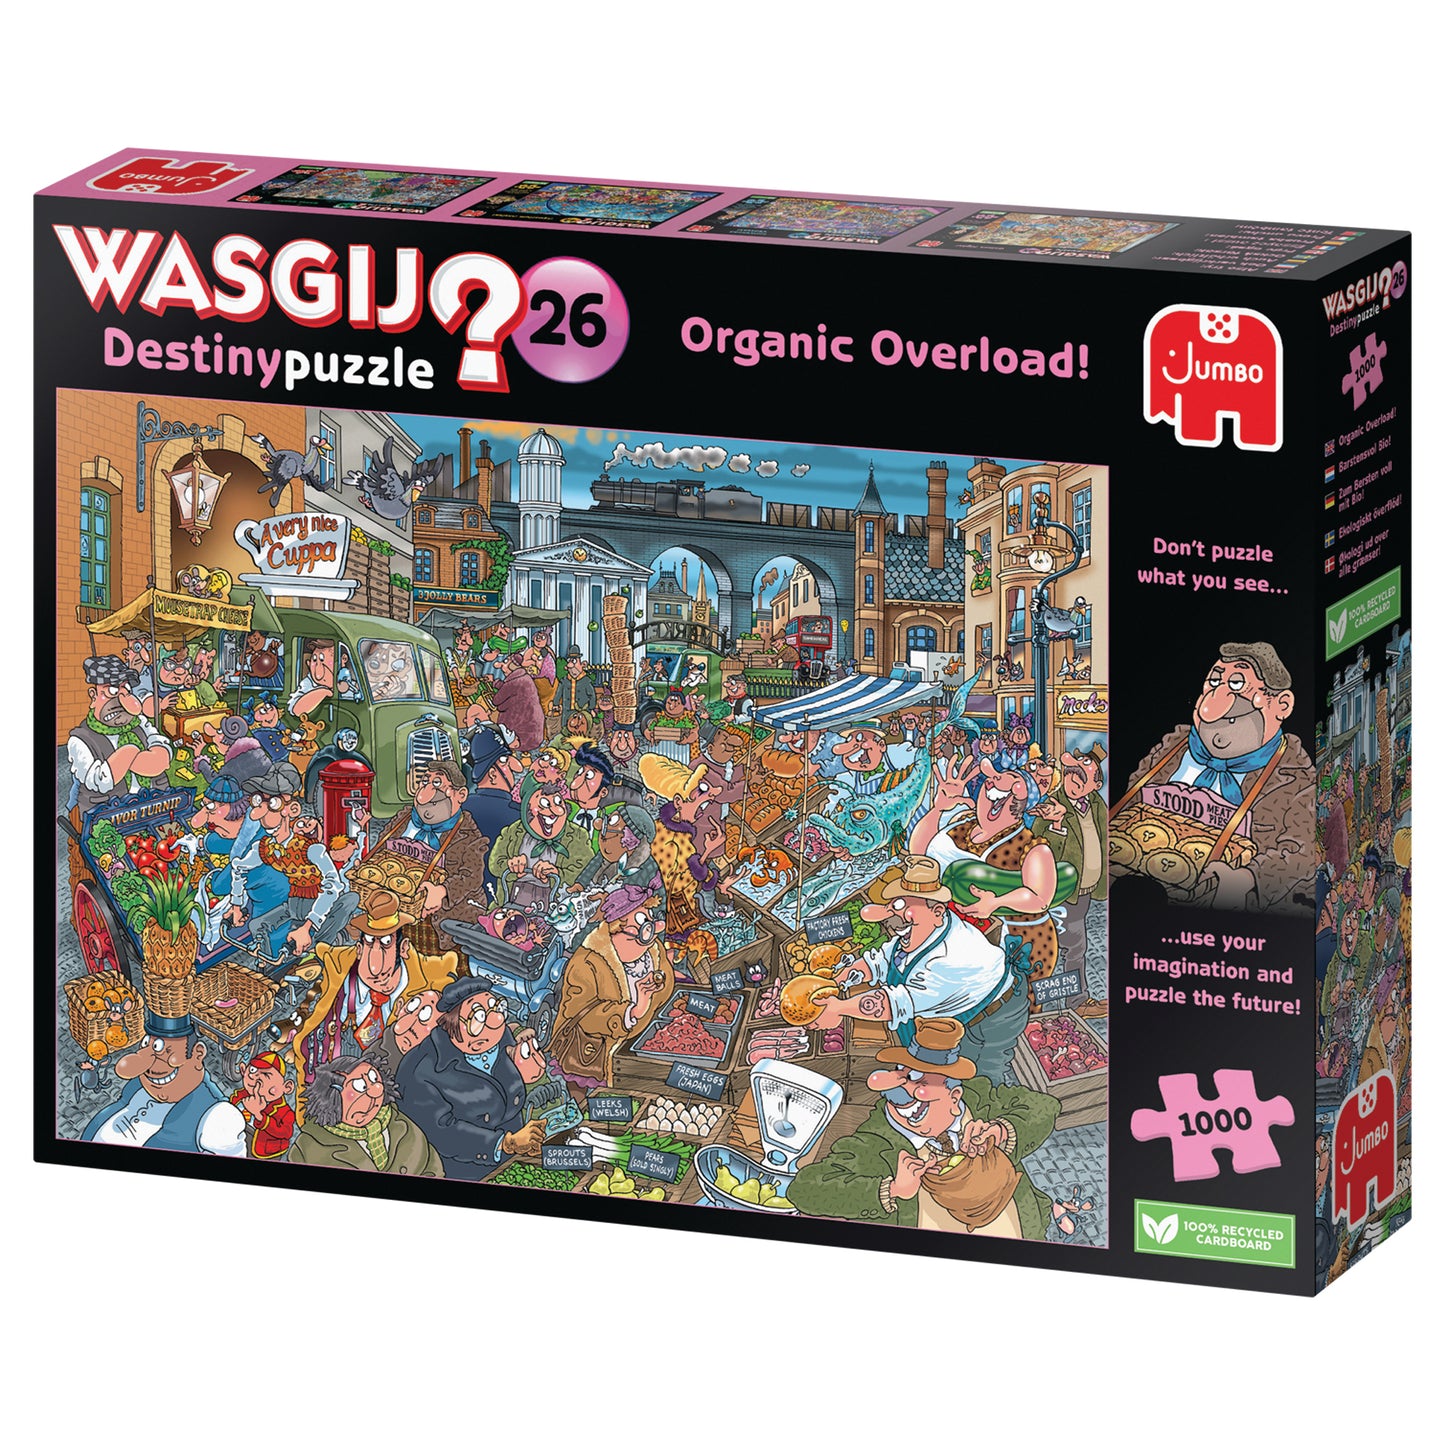 Wasgij Destiny 26 - Organic Overload - 1000 Piece Jigsaw Puzzle